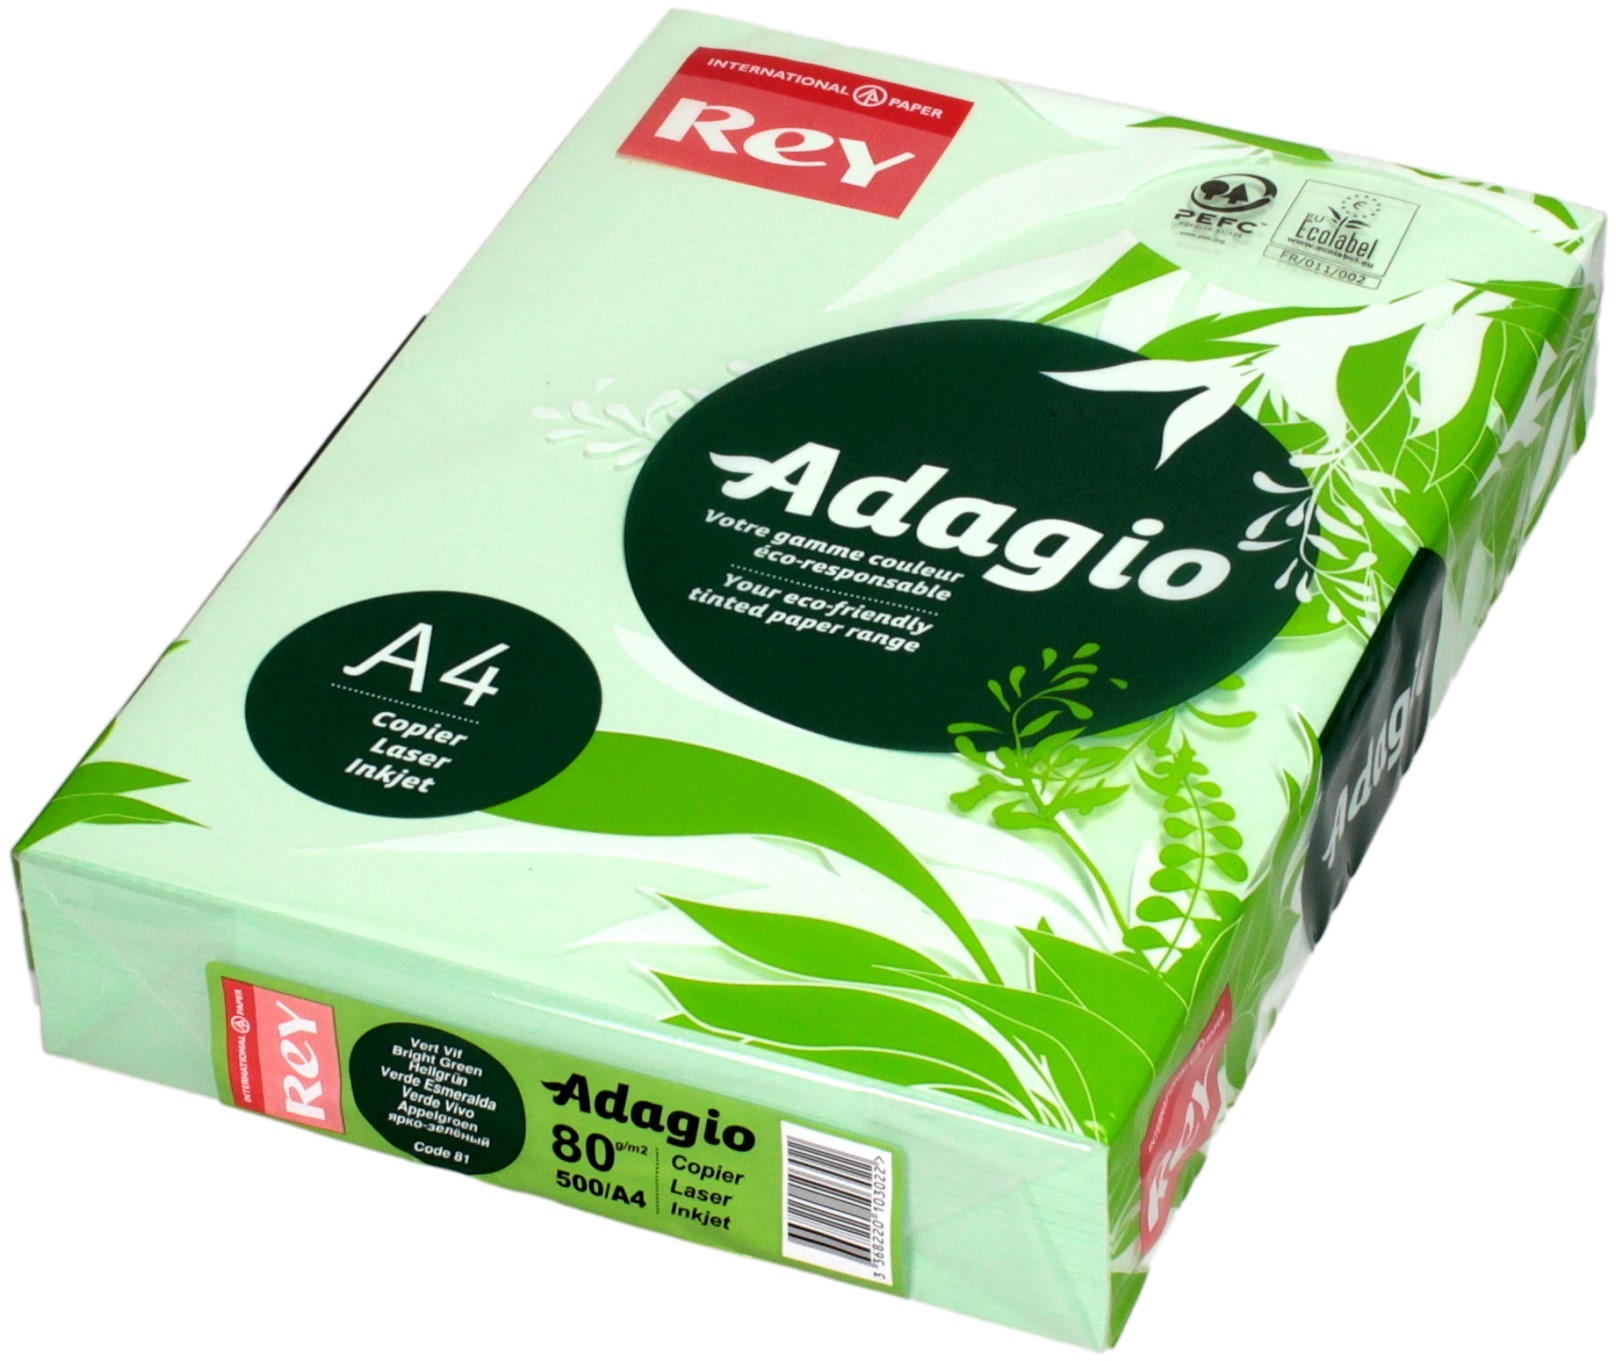 Adagio Papier ksero A4 80g jasnozielony 81